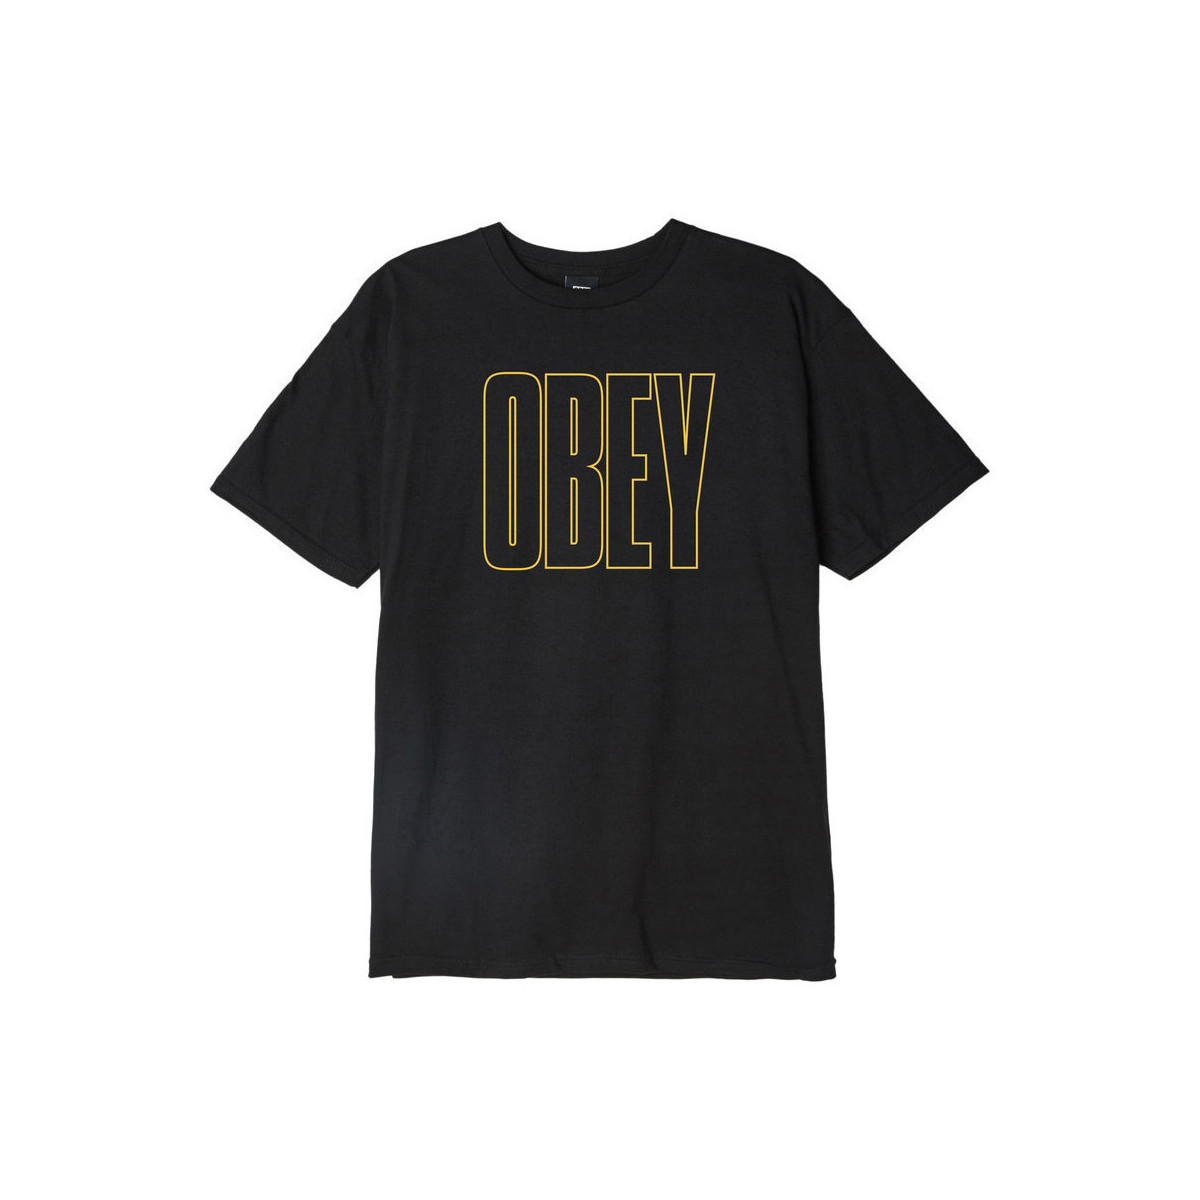 textil Herr T-shirts & Pikétröjor Obey worldwide line Svart